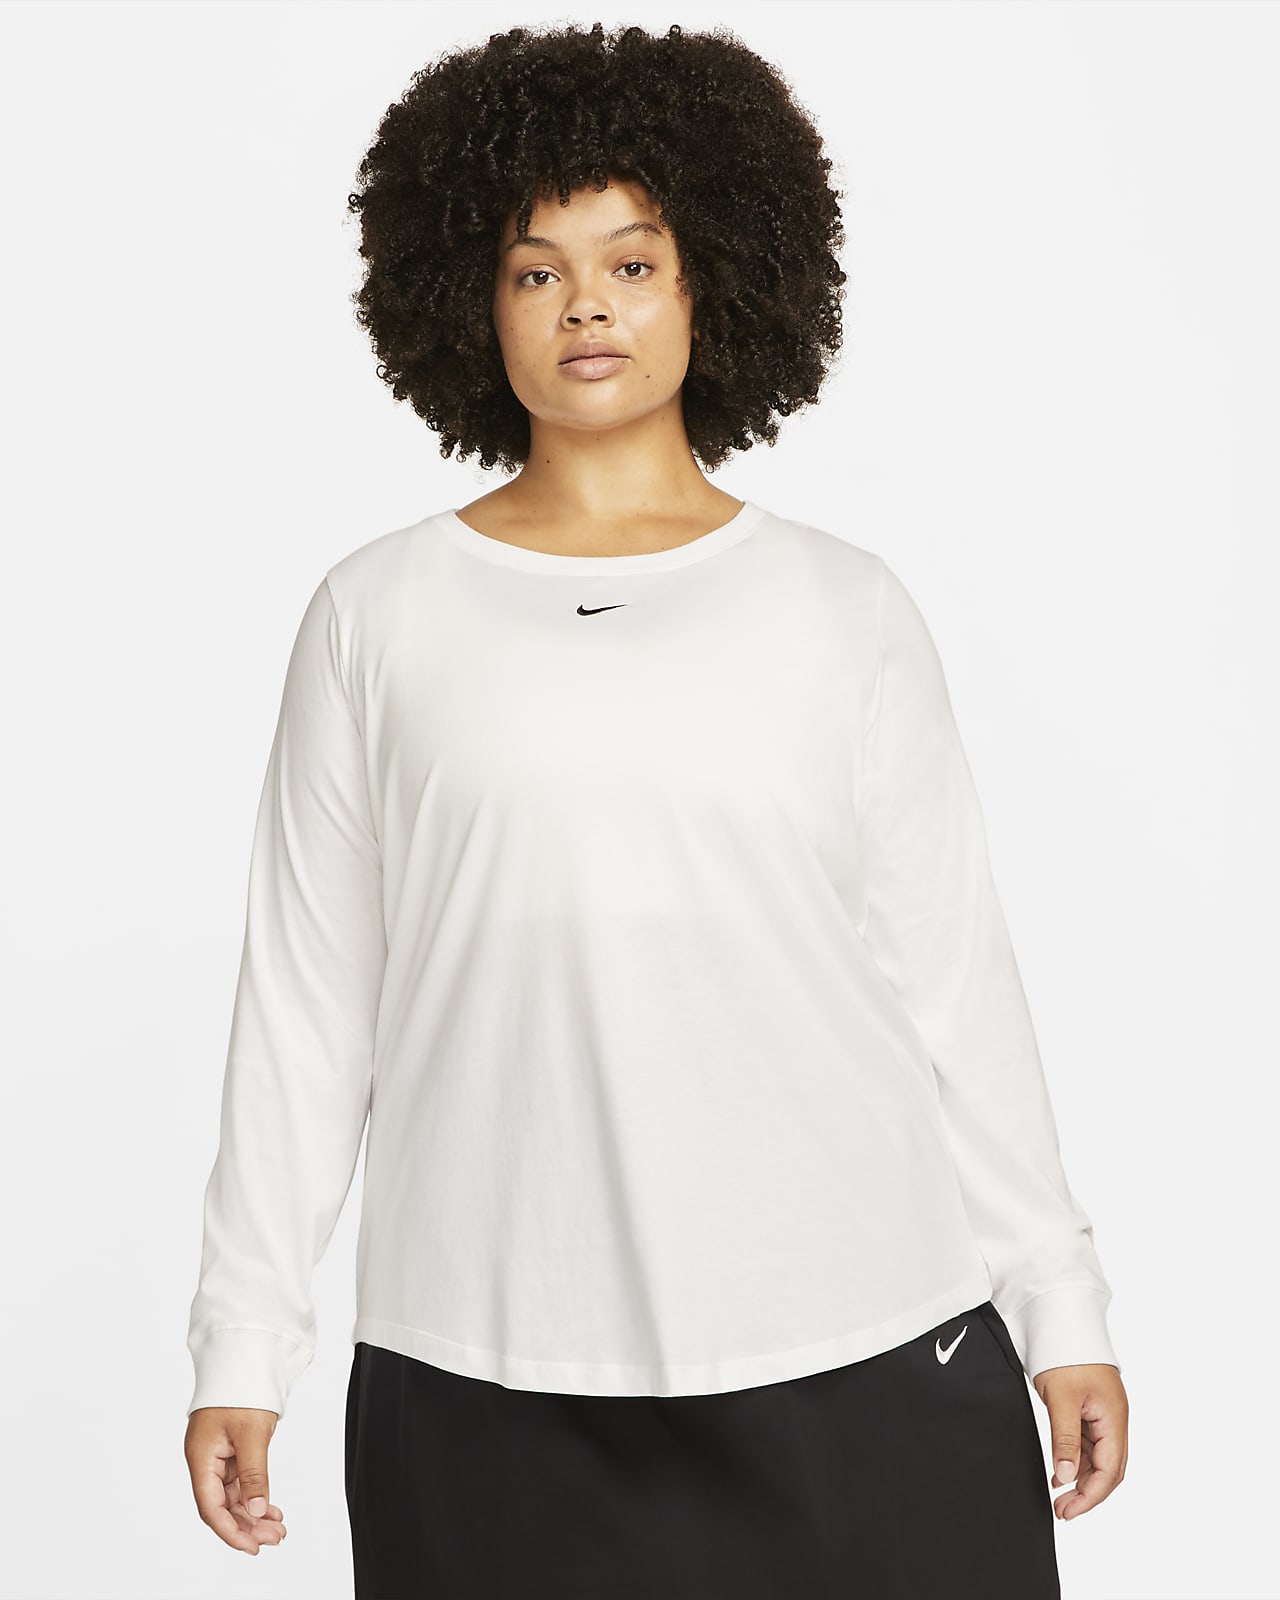 Verslaafde Perceptueel Gedwongen Nike Sportswear T-shirt met lange mouwen voor dames (Plus Size). Nike NL